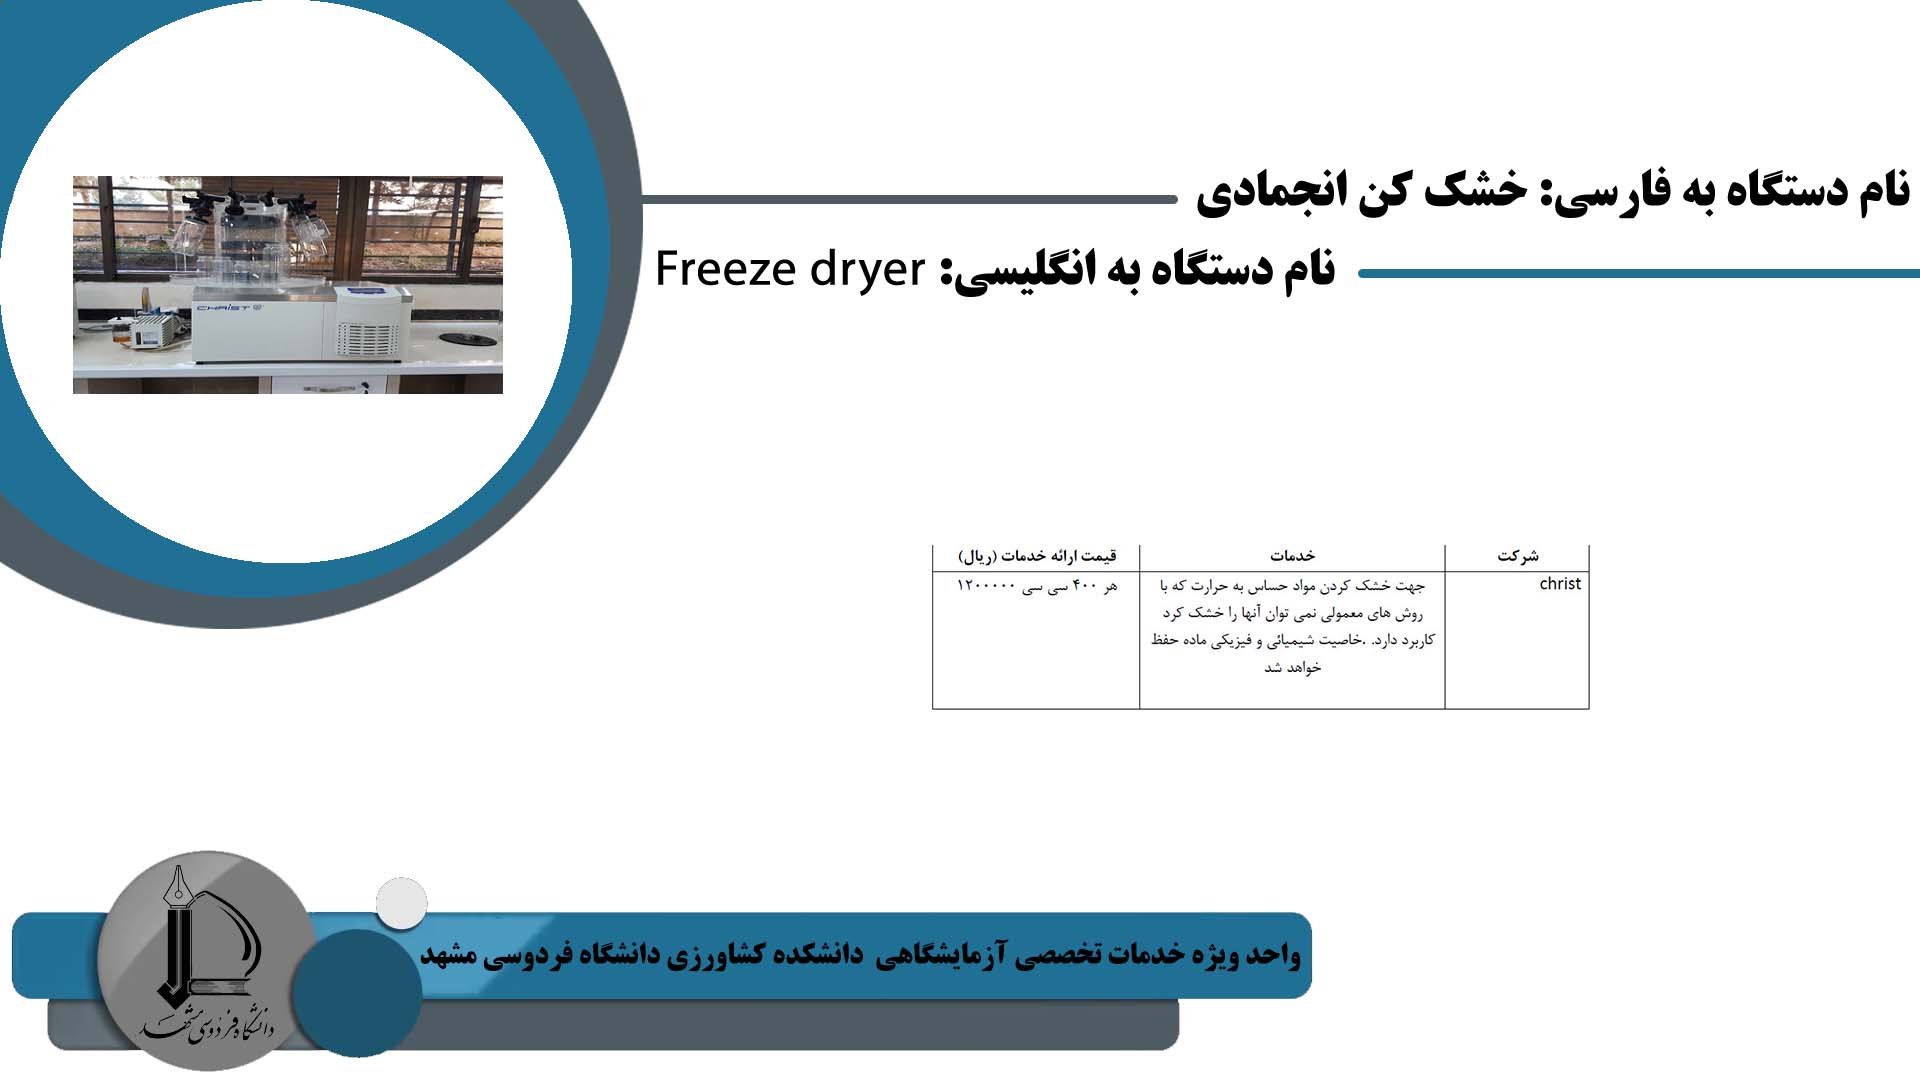 Freeze dryer